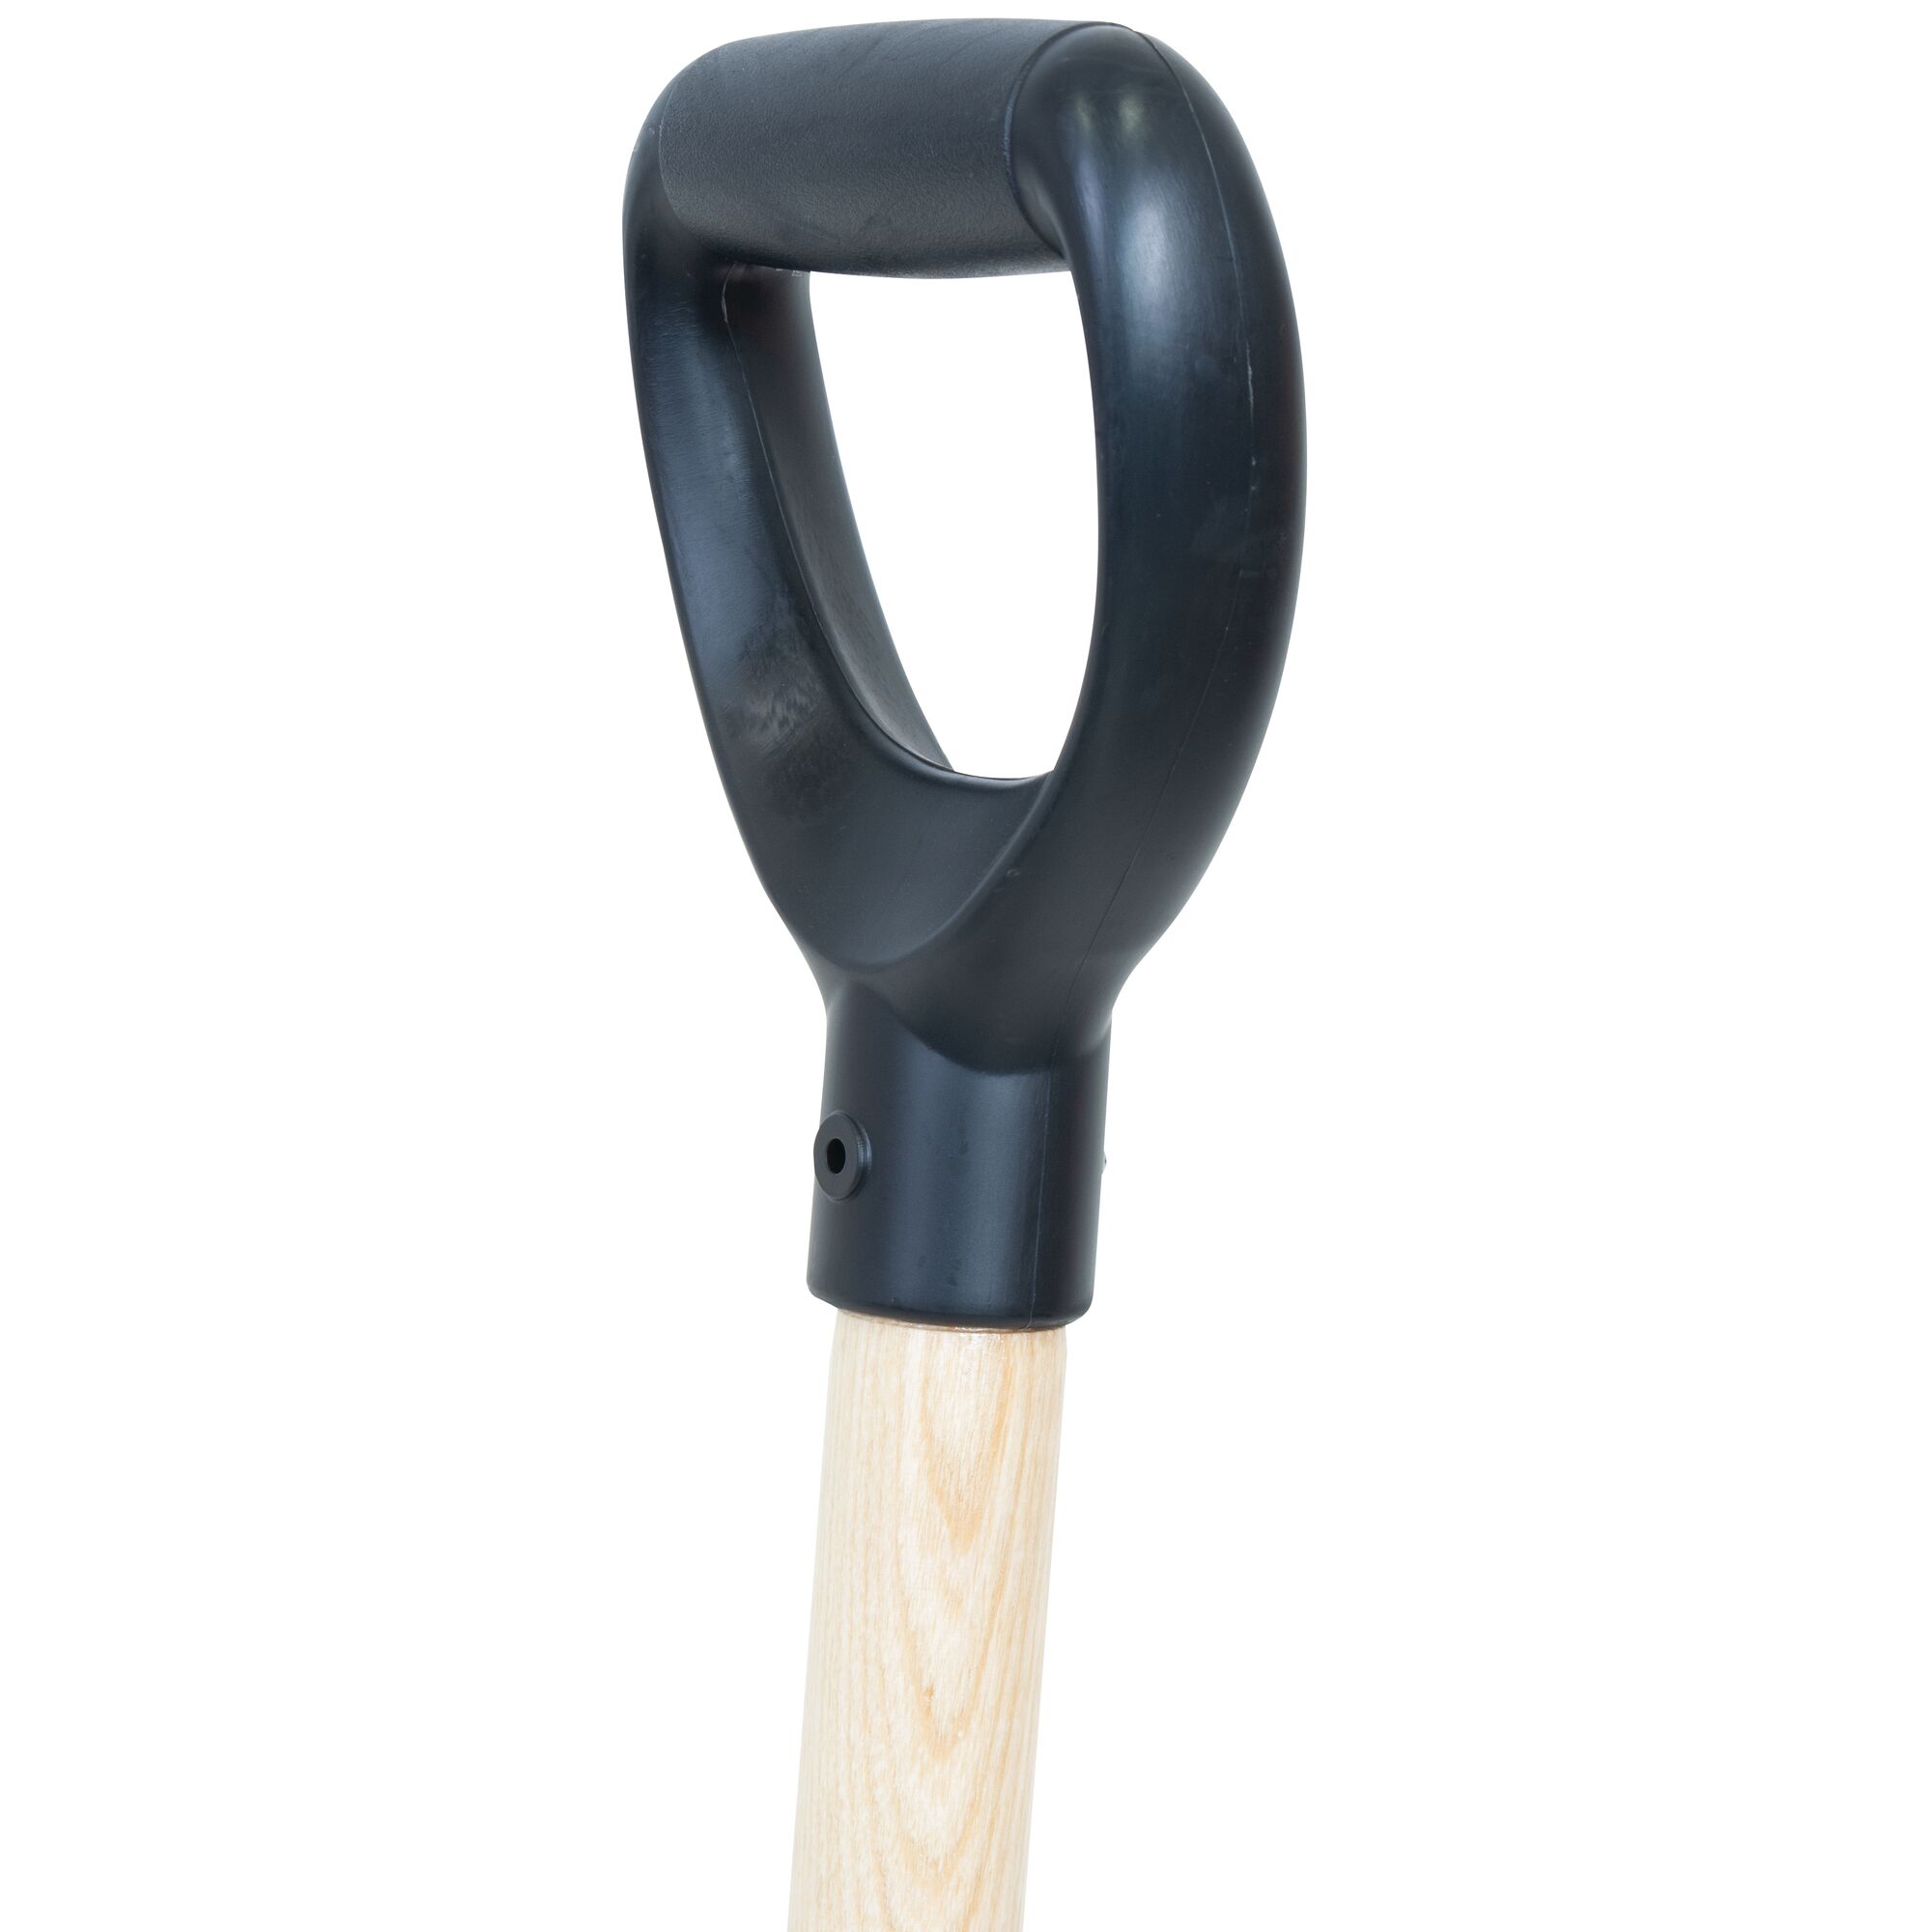 Ergonomic D grip handle feature in wood handle poly scoop.